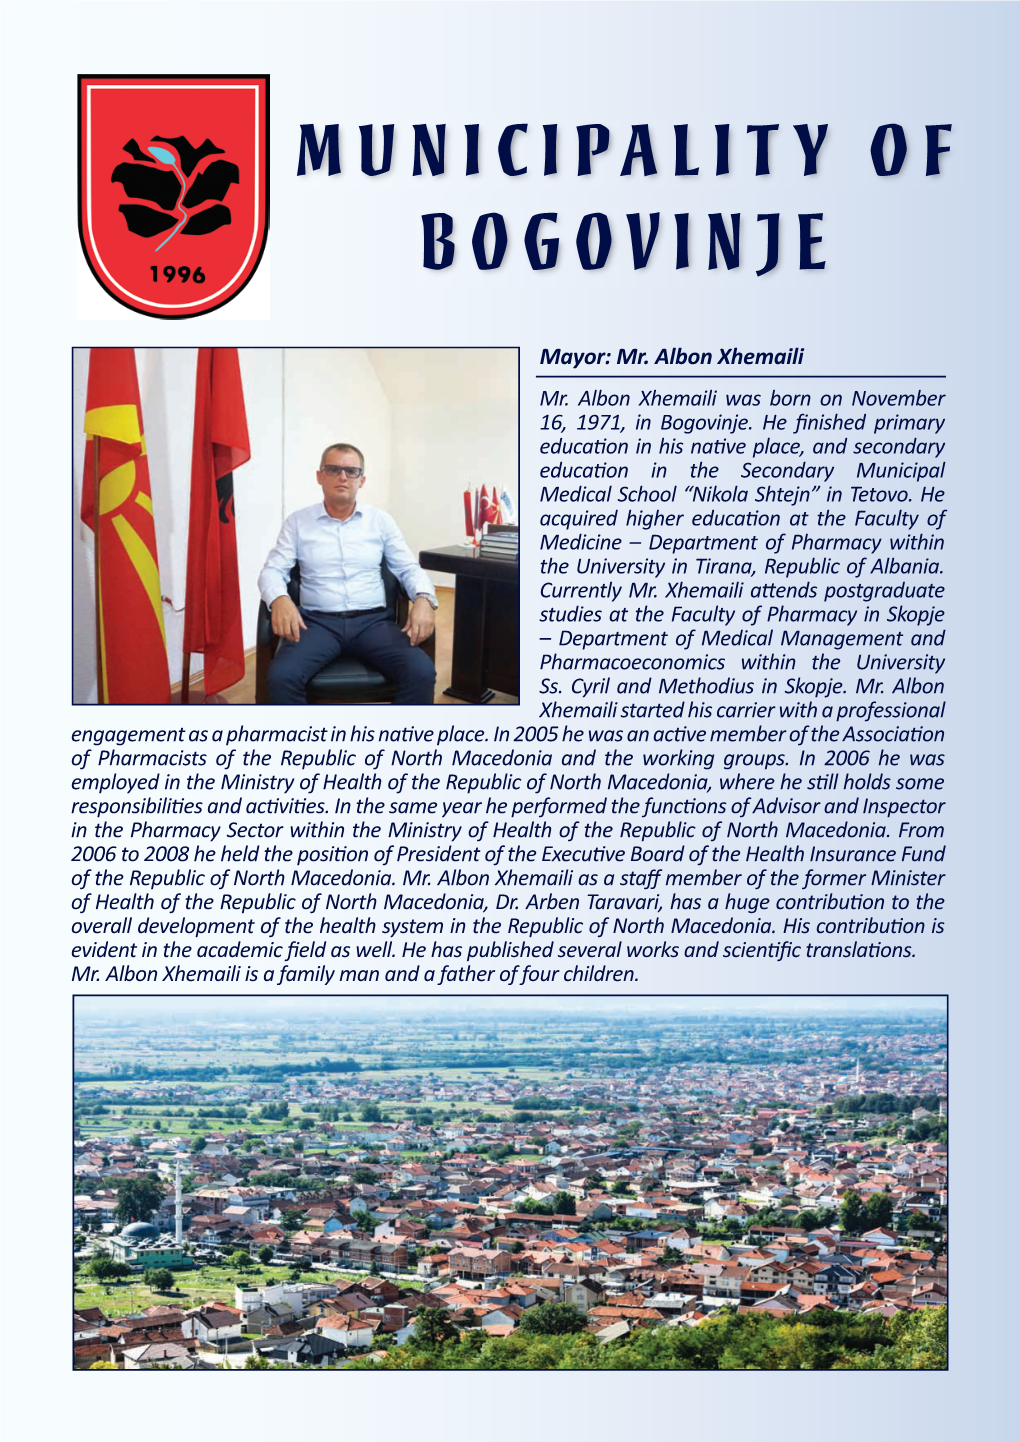 Presentation of the Municipality of Bogovinje